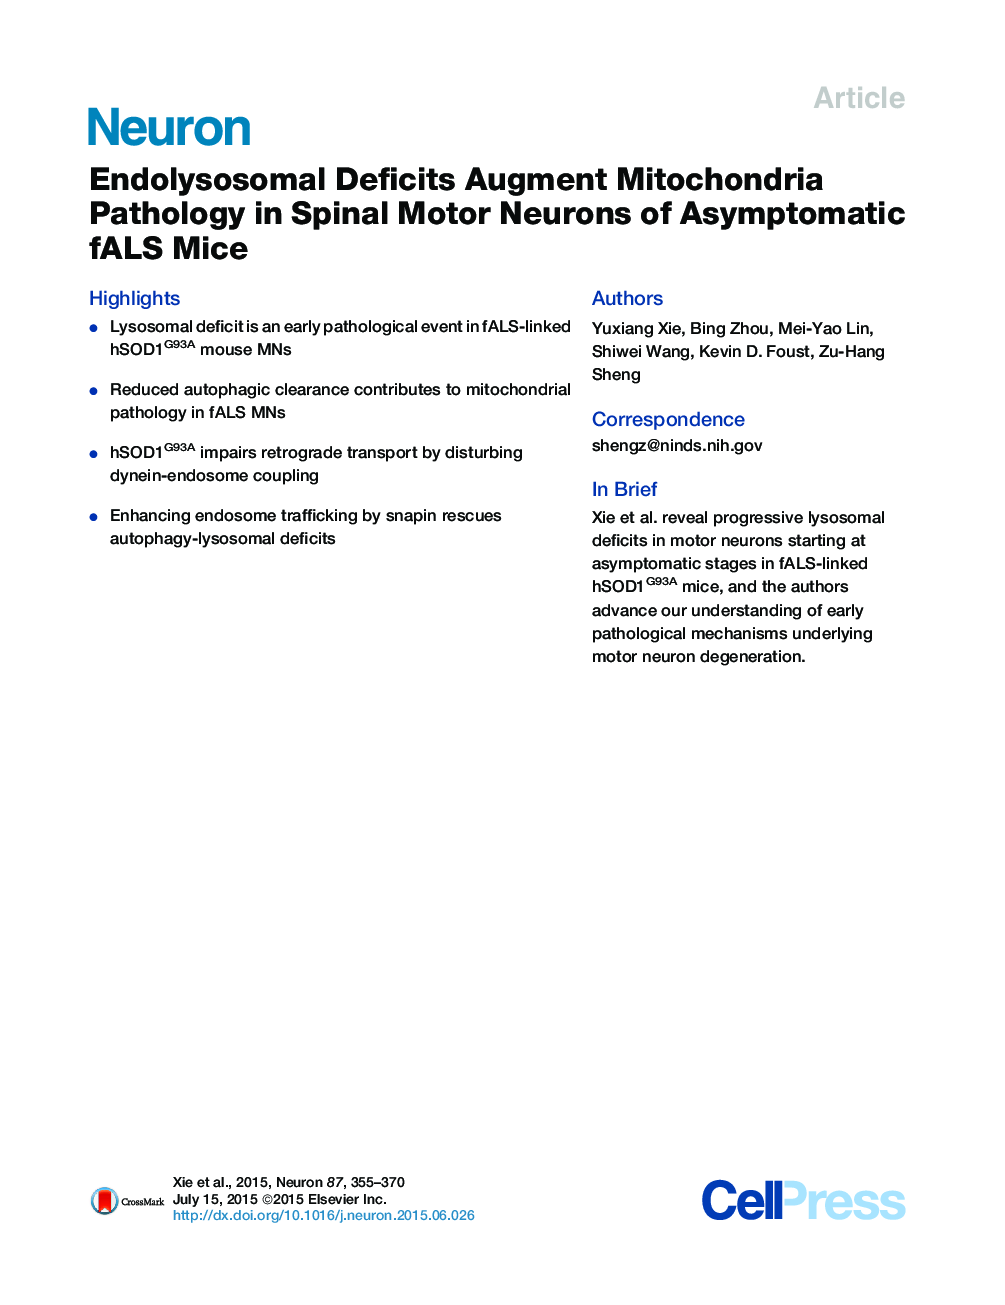 Endolysosomal Deficits Augment Mitochondria Pathology in Spinal Motor Neurons of Asymptomatic fALS Mice